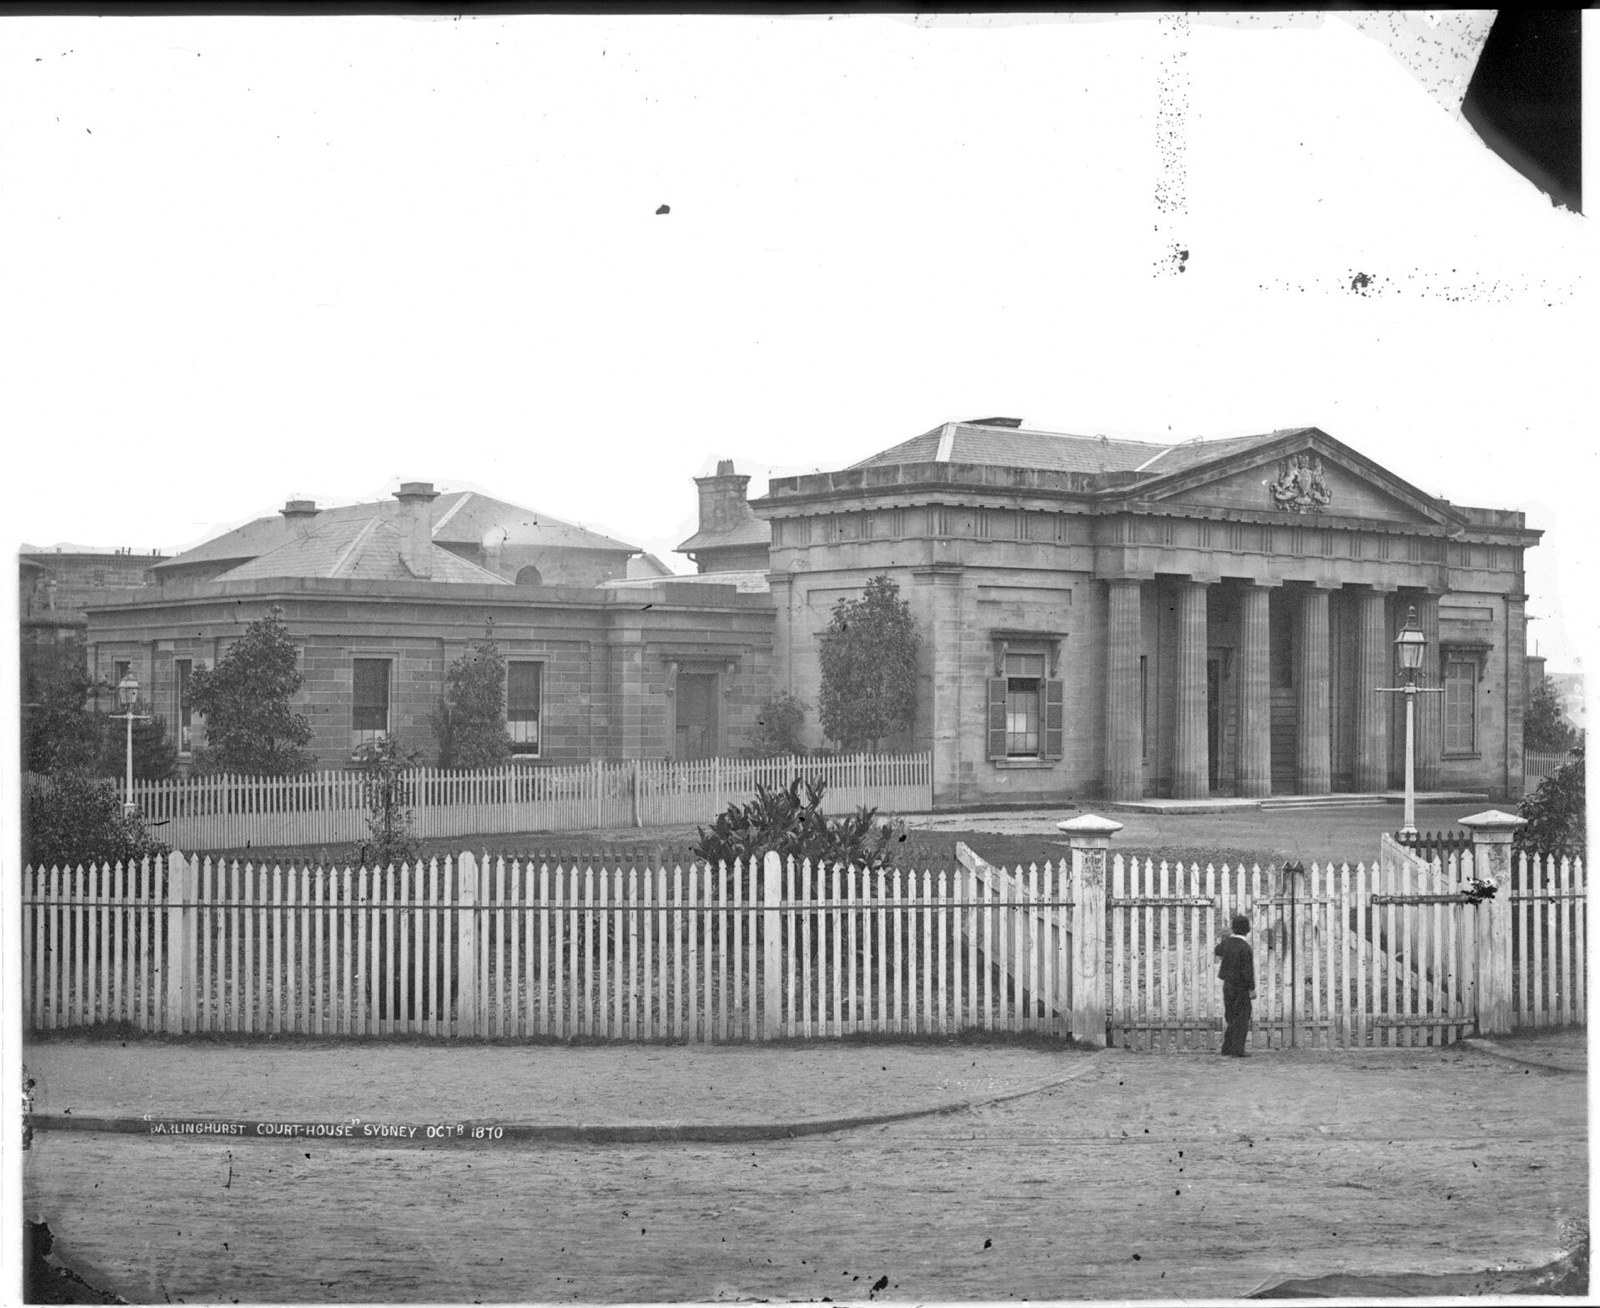 Government Printing Office 1 - 05673 - Darlinghurst Court House, Sydney Oct 1870